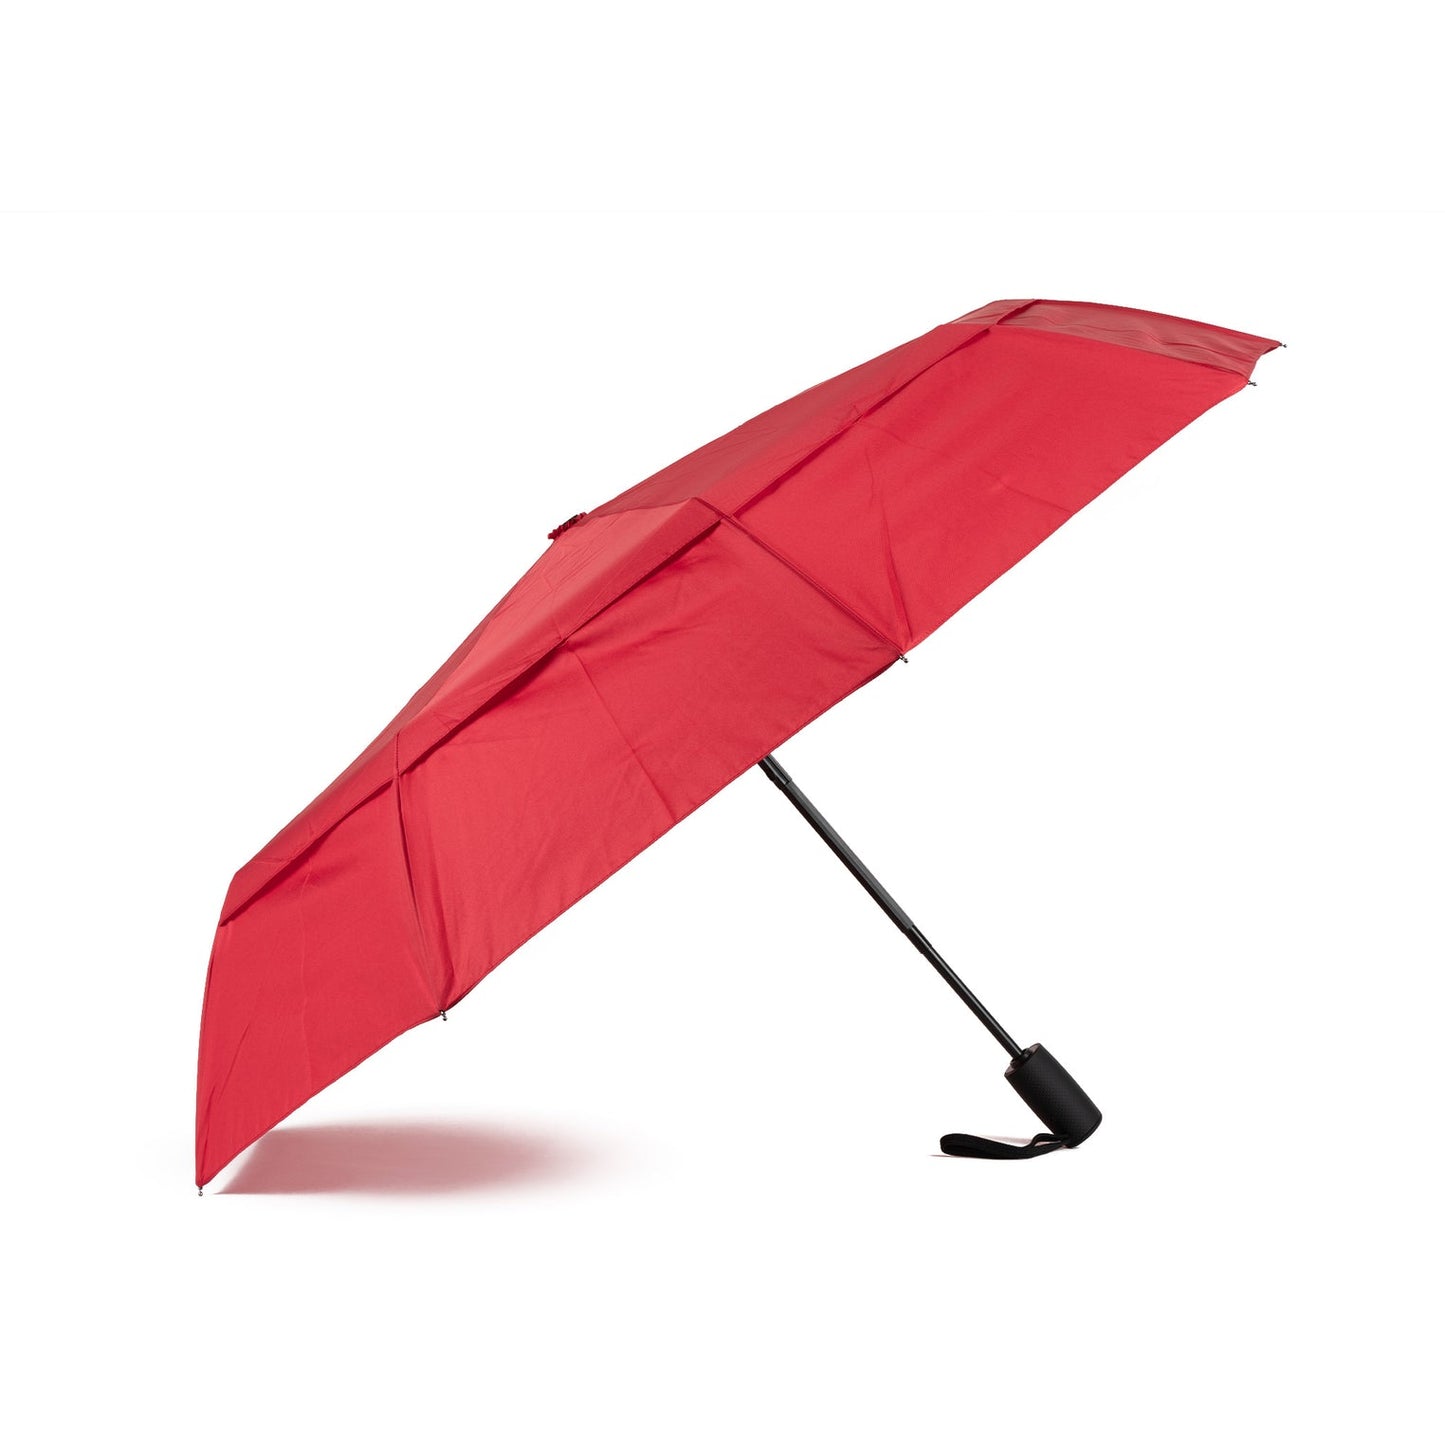 Waterloo nylon cranberry - recycled & eco-friendly umbrella